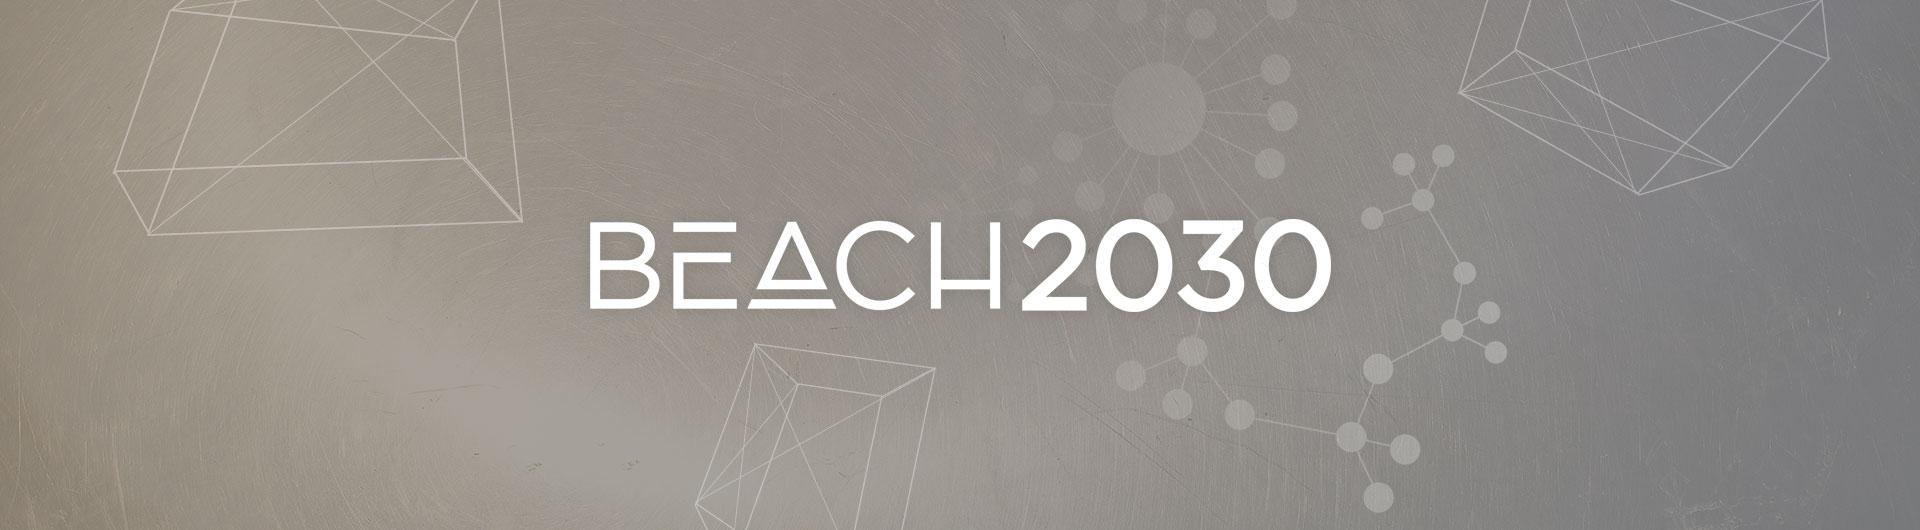 Imagine Beach 2030